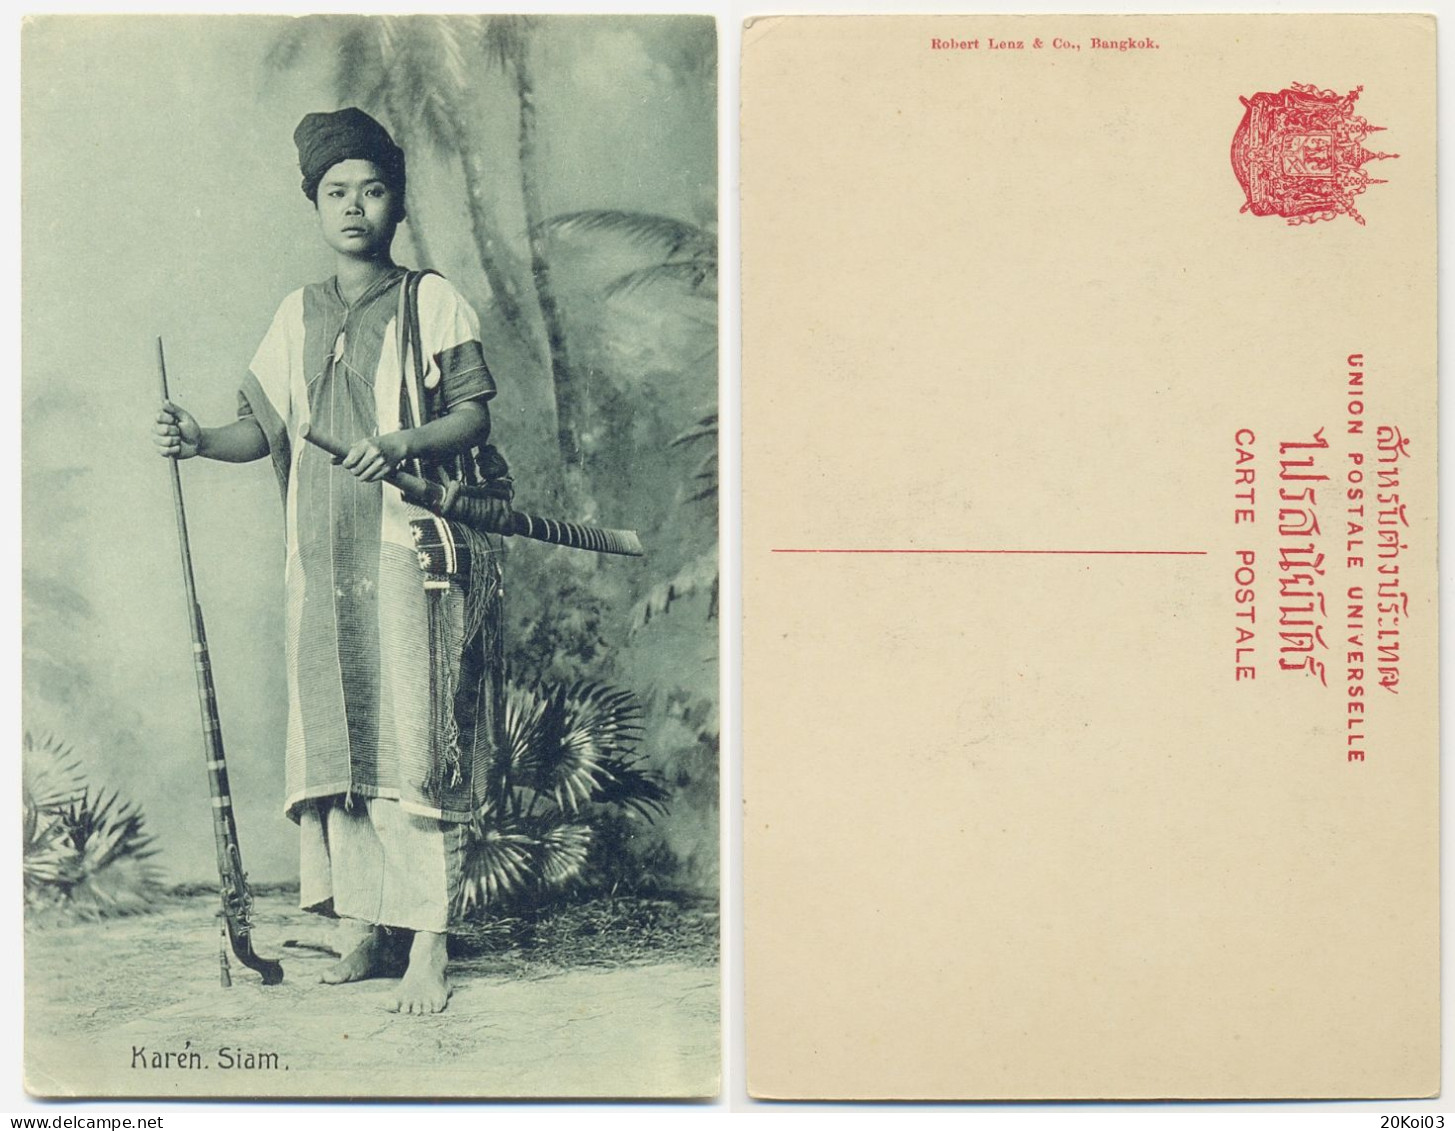 Karen Siam Hill-tribes Thailand_UNC SUP_Vintage 1900's_Robert Lenz & Co, Bangkok_Union Postale Universelle_Old CPA-cpc - Tailandia